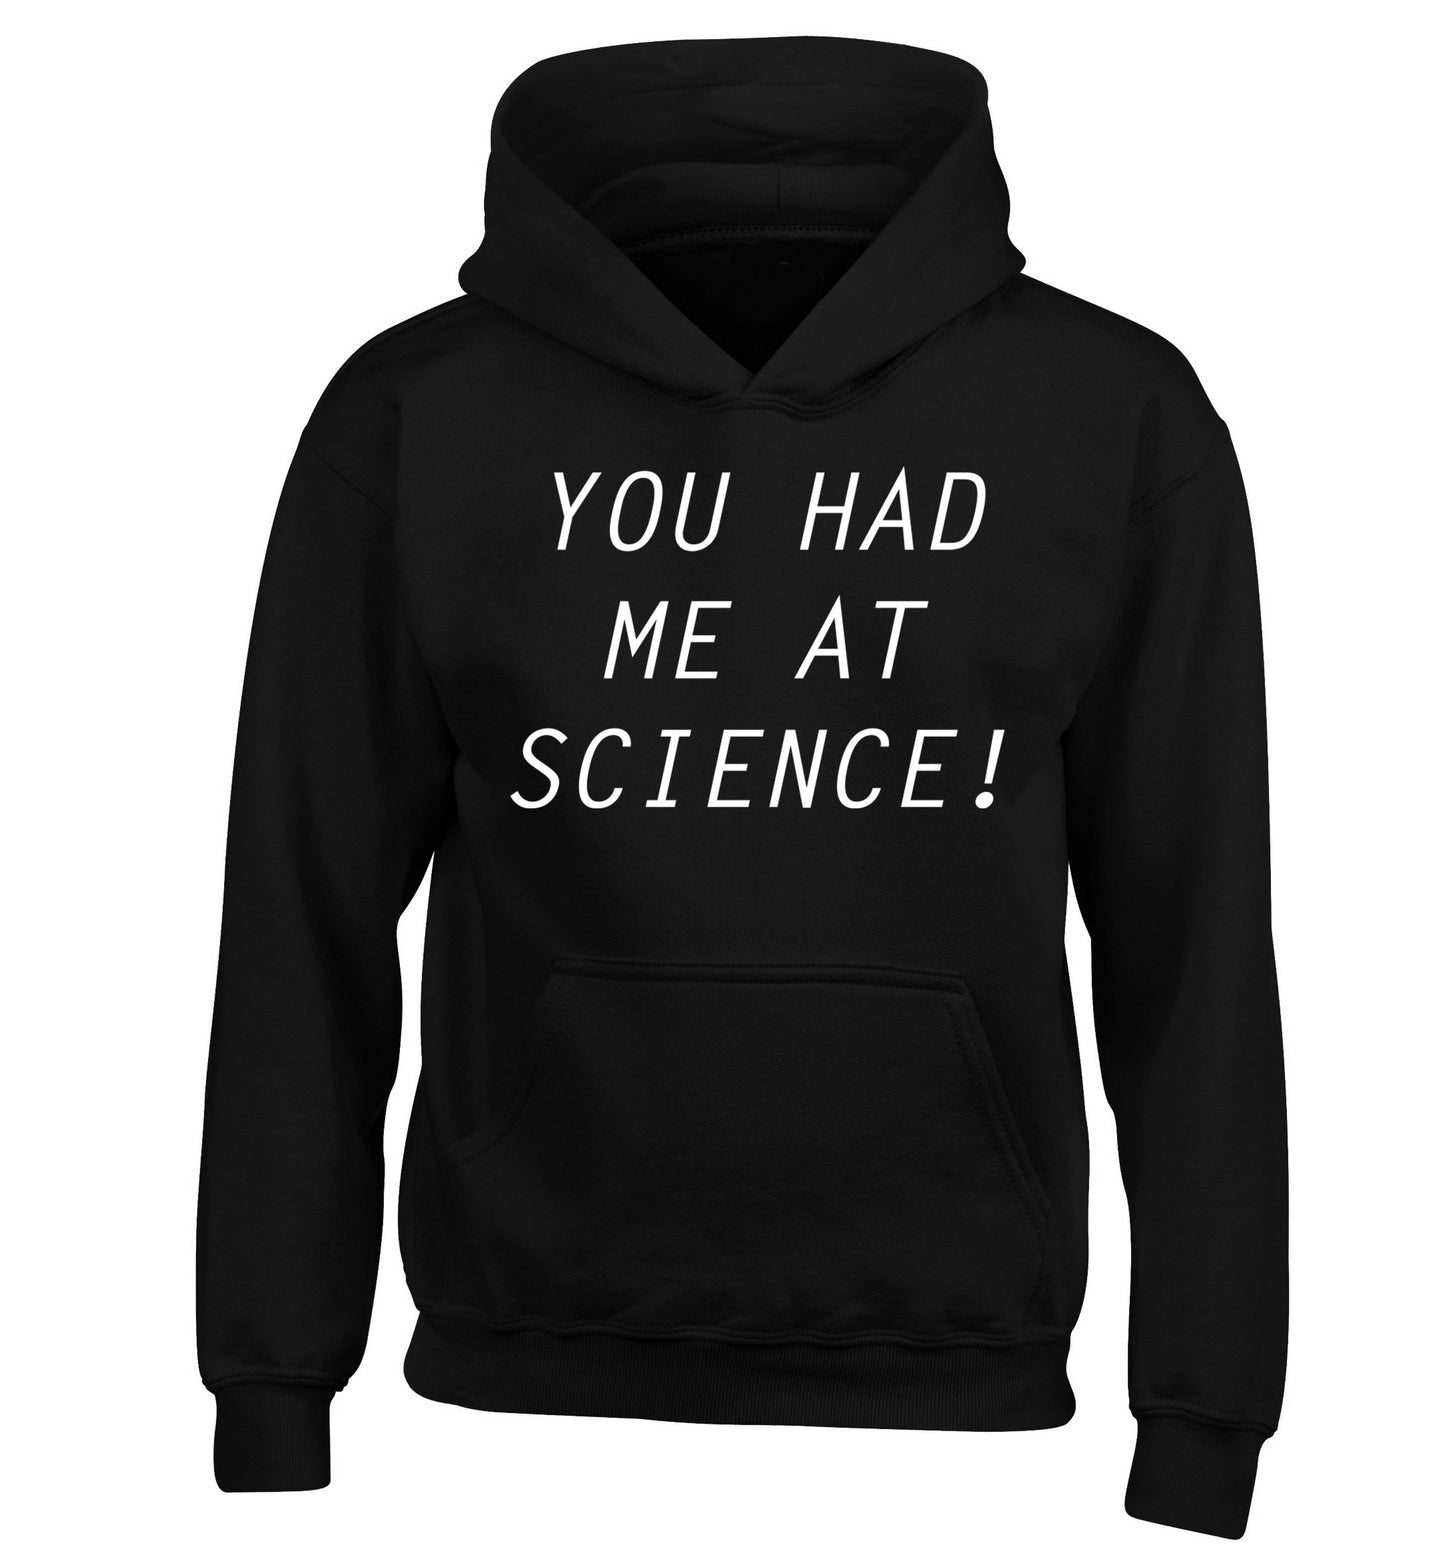 You had me at science children's black hoodie 12-14 Years